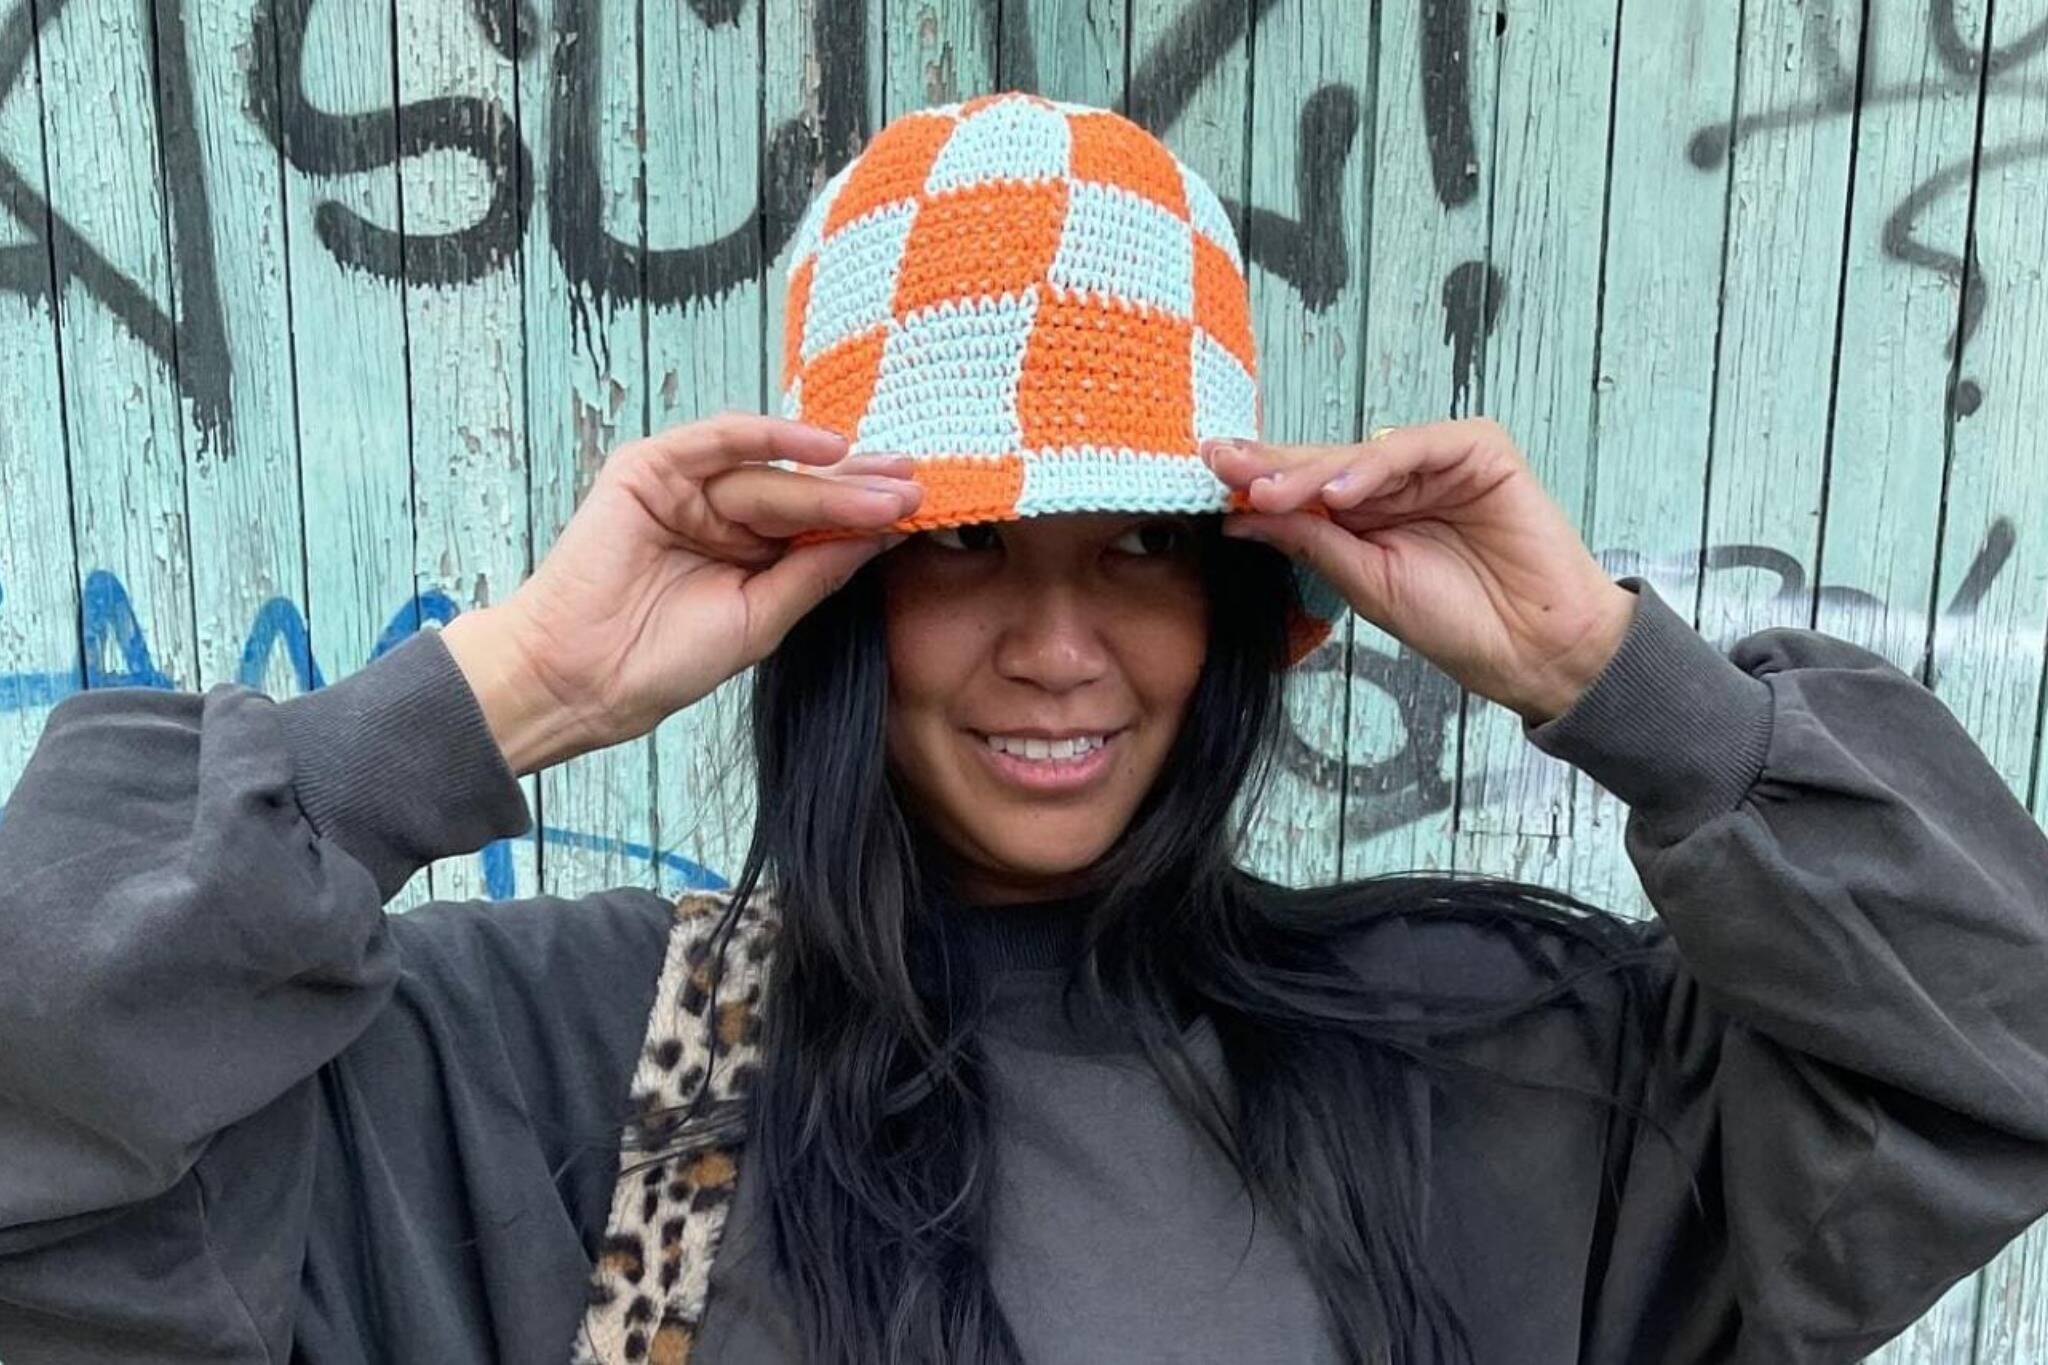 This designer in Toronto has blown up thanks to her crochet bucket hats